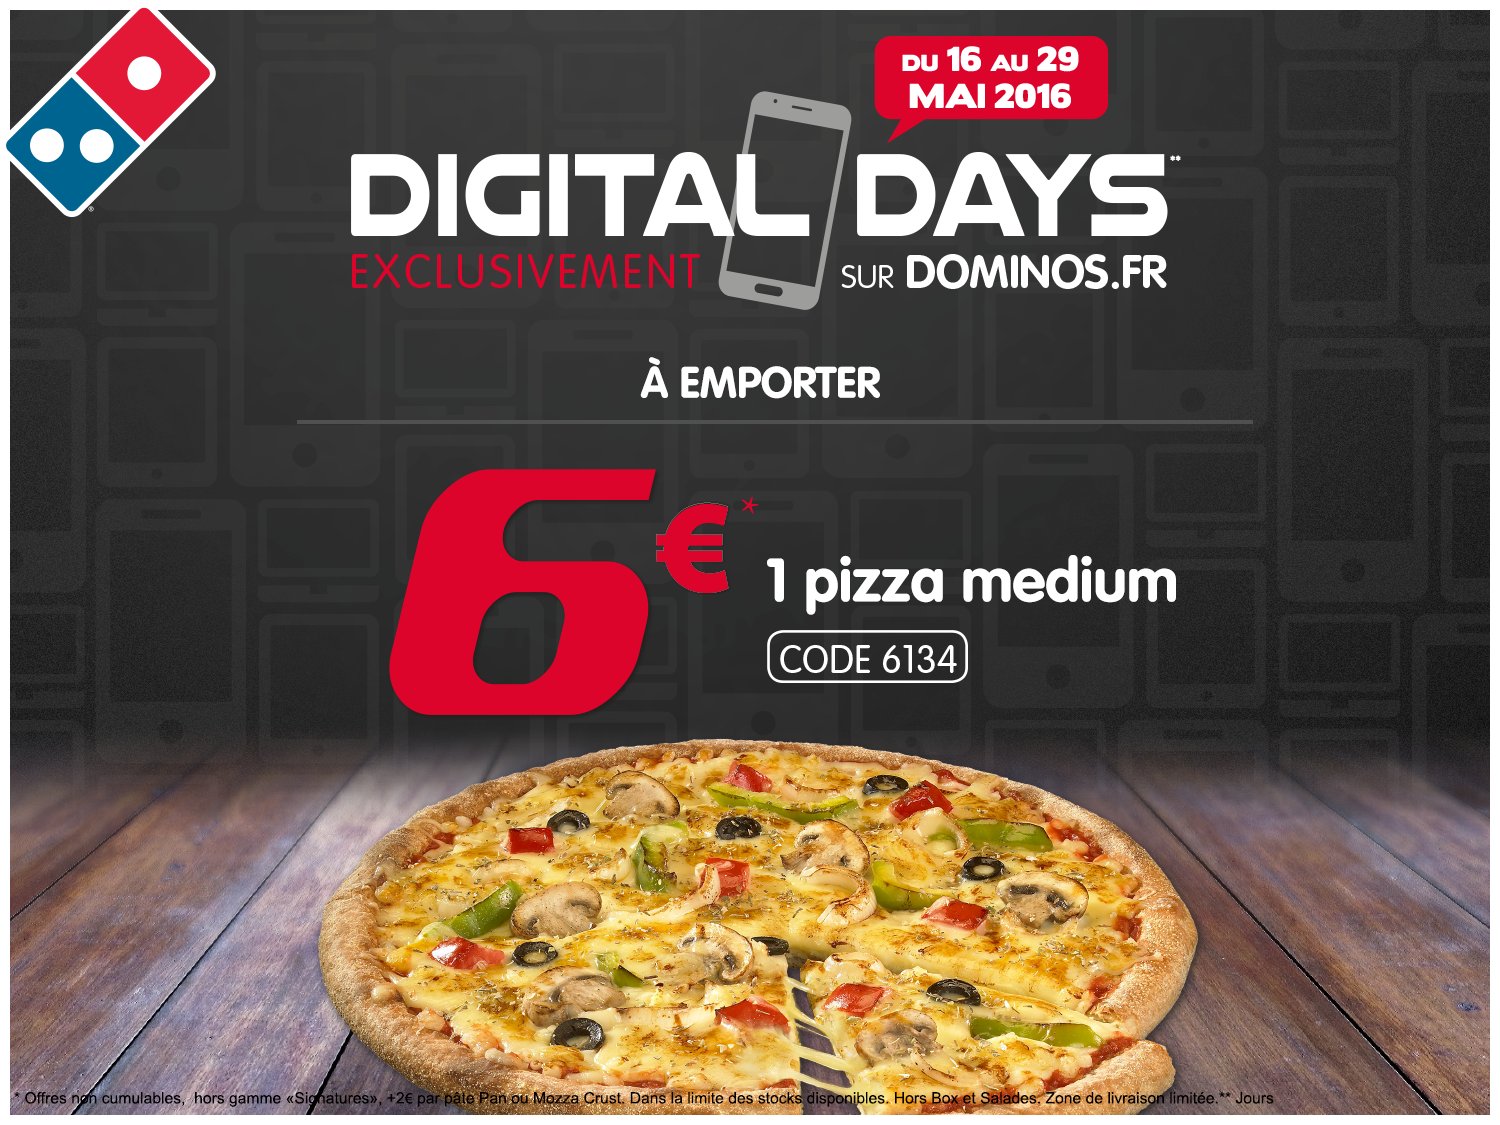 Domino's Pizza France on X: "🍕 Ce midi profitez des Digital Days ! 6€ la  pizza medium à emporter en commandant sur https://t.co/keBvo9R6to  https://t.co/TPVbx4f1SY" / X